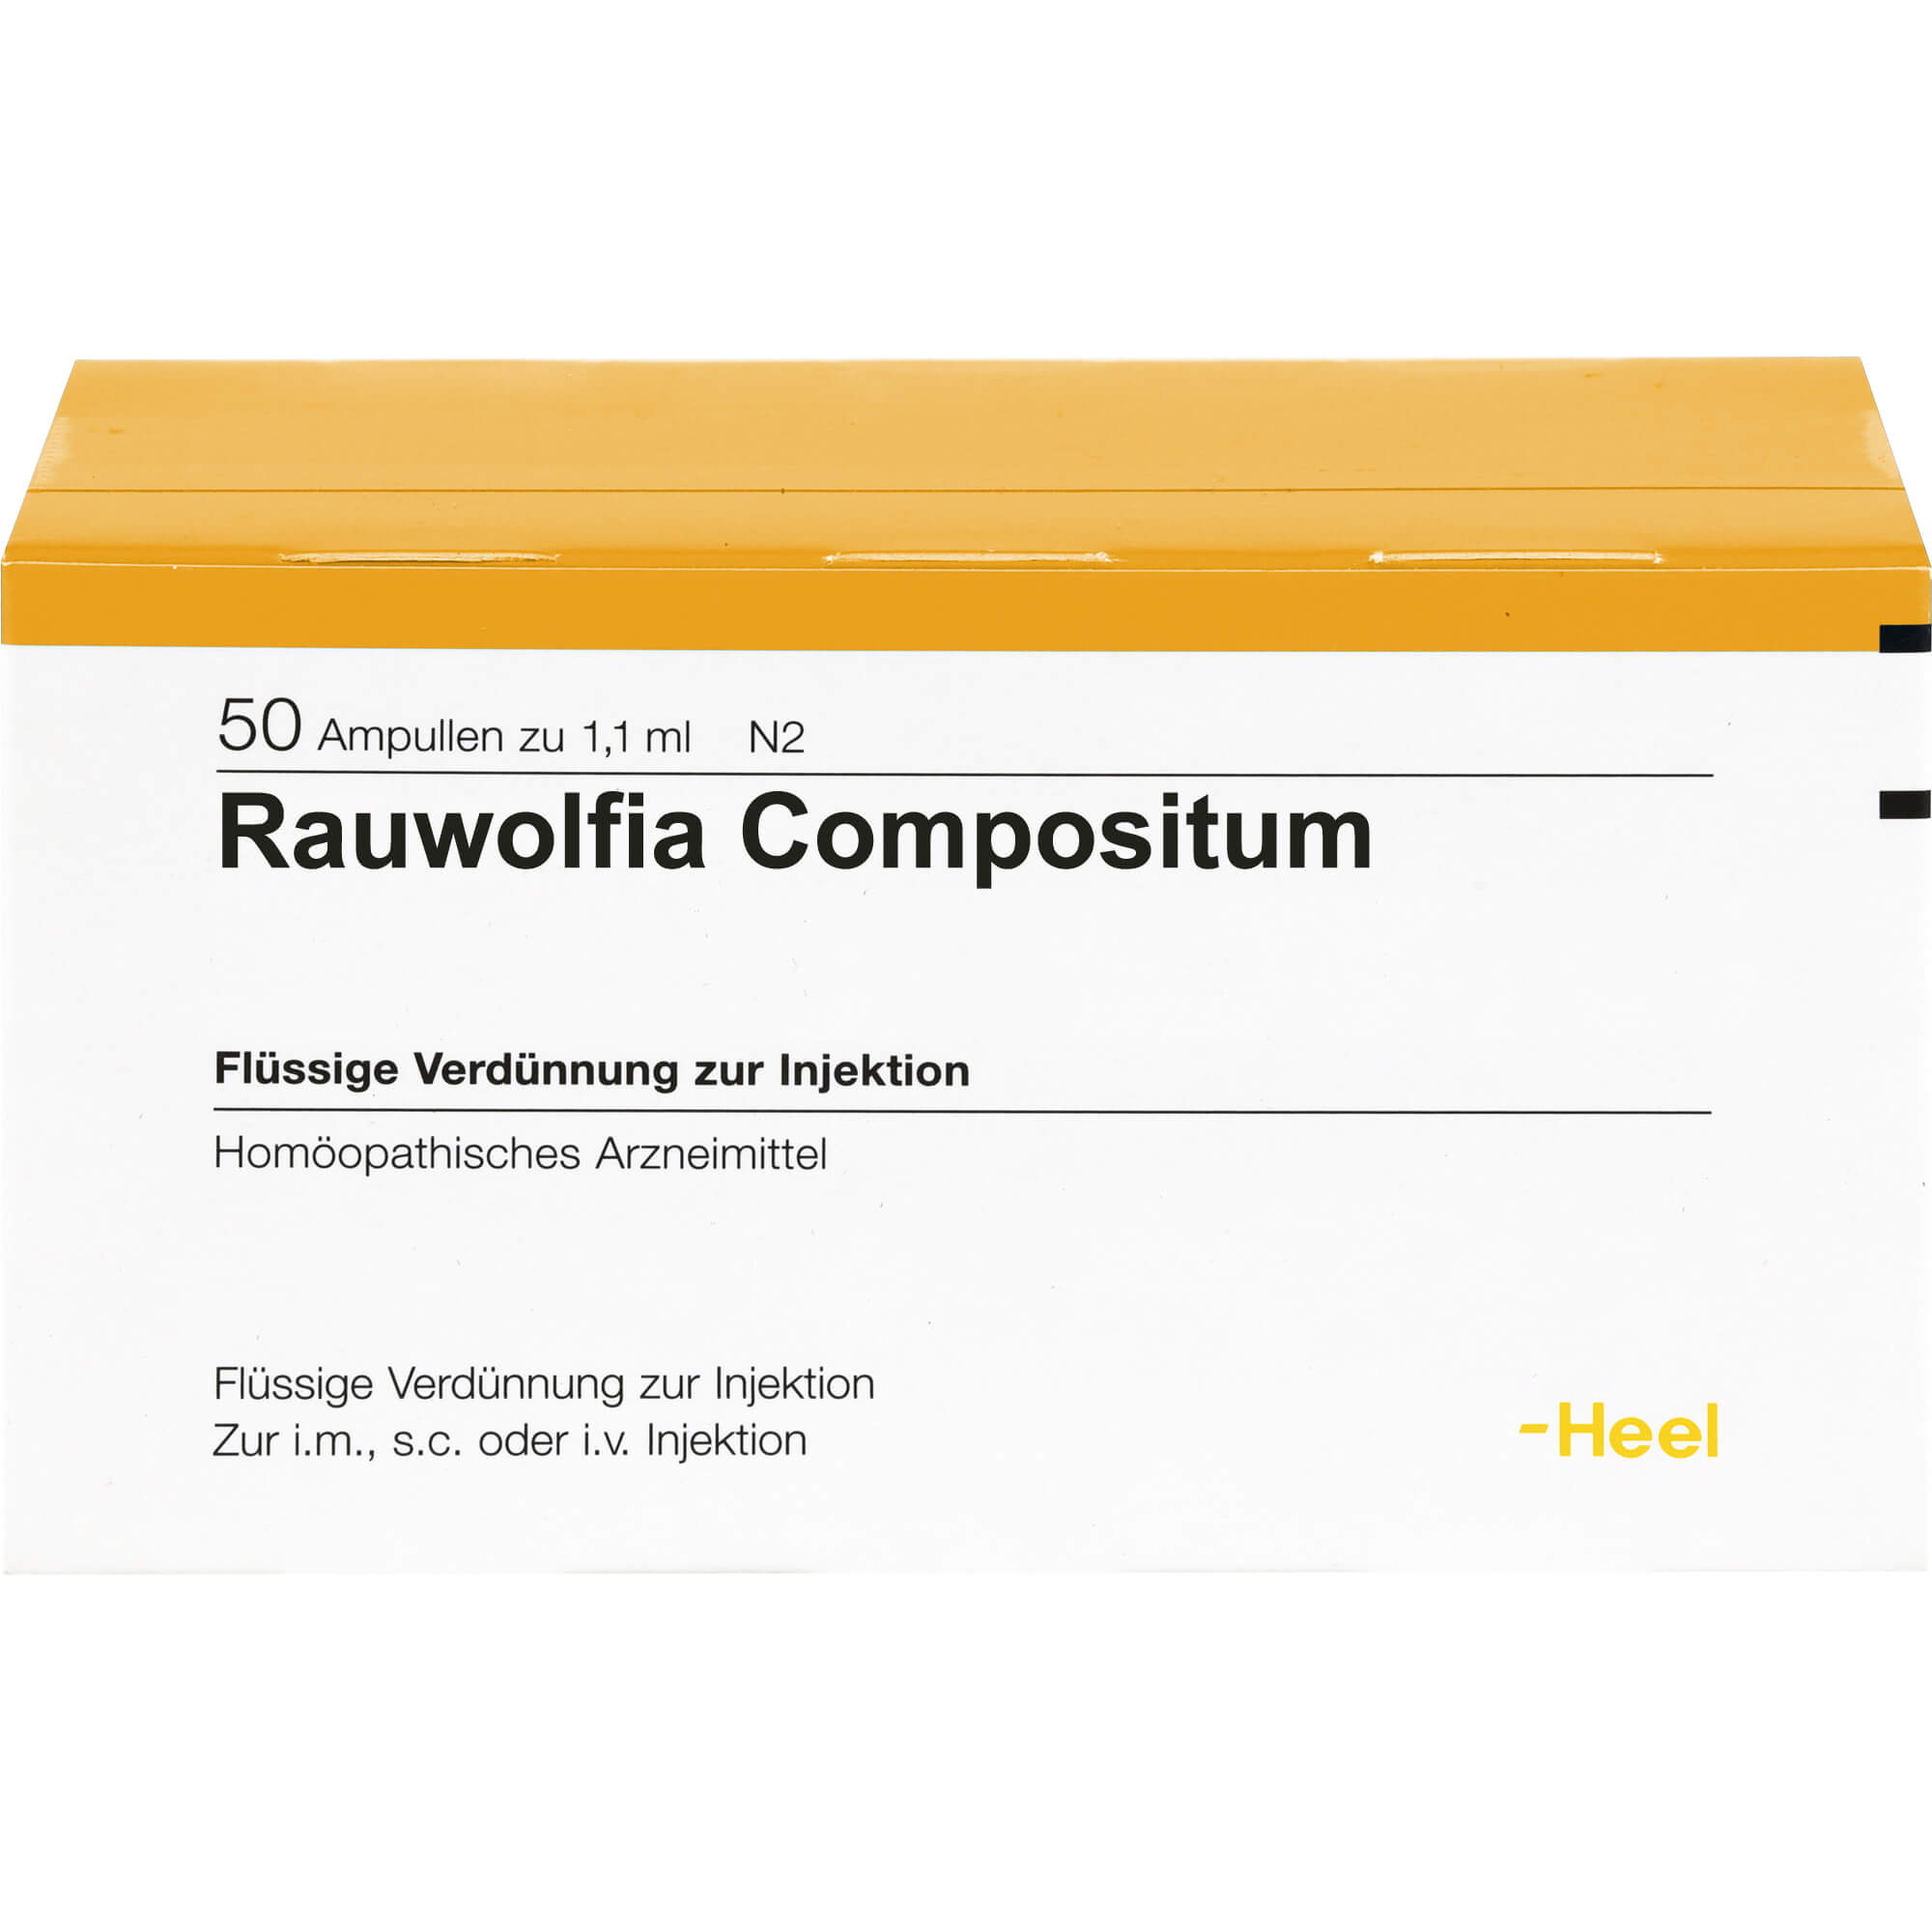 RAUWOLFIA COMPOSITUM Ampullen